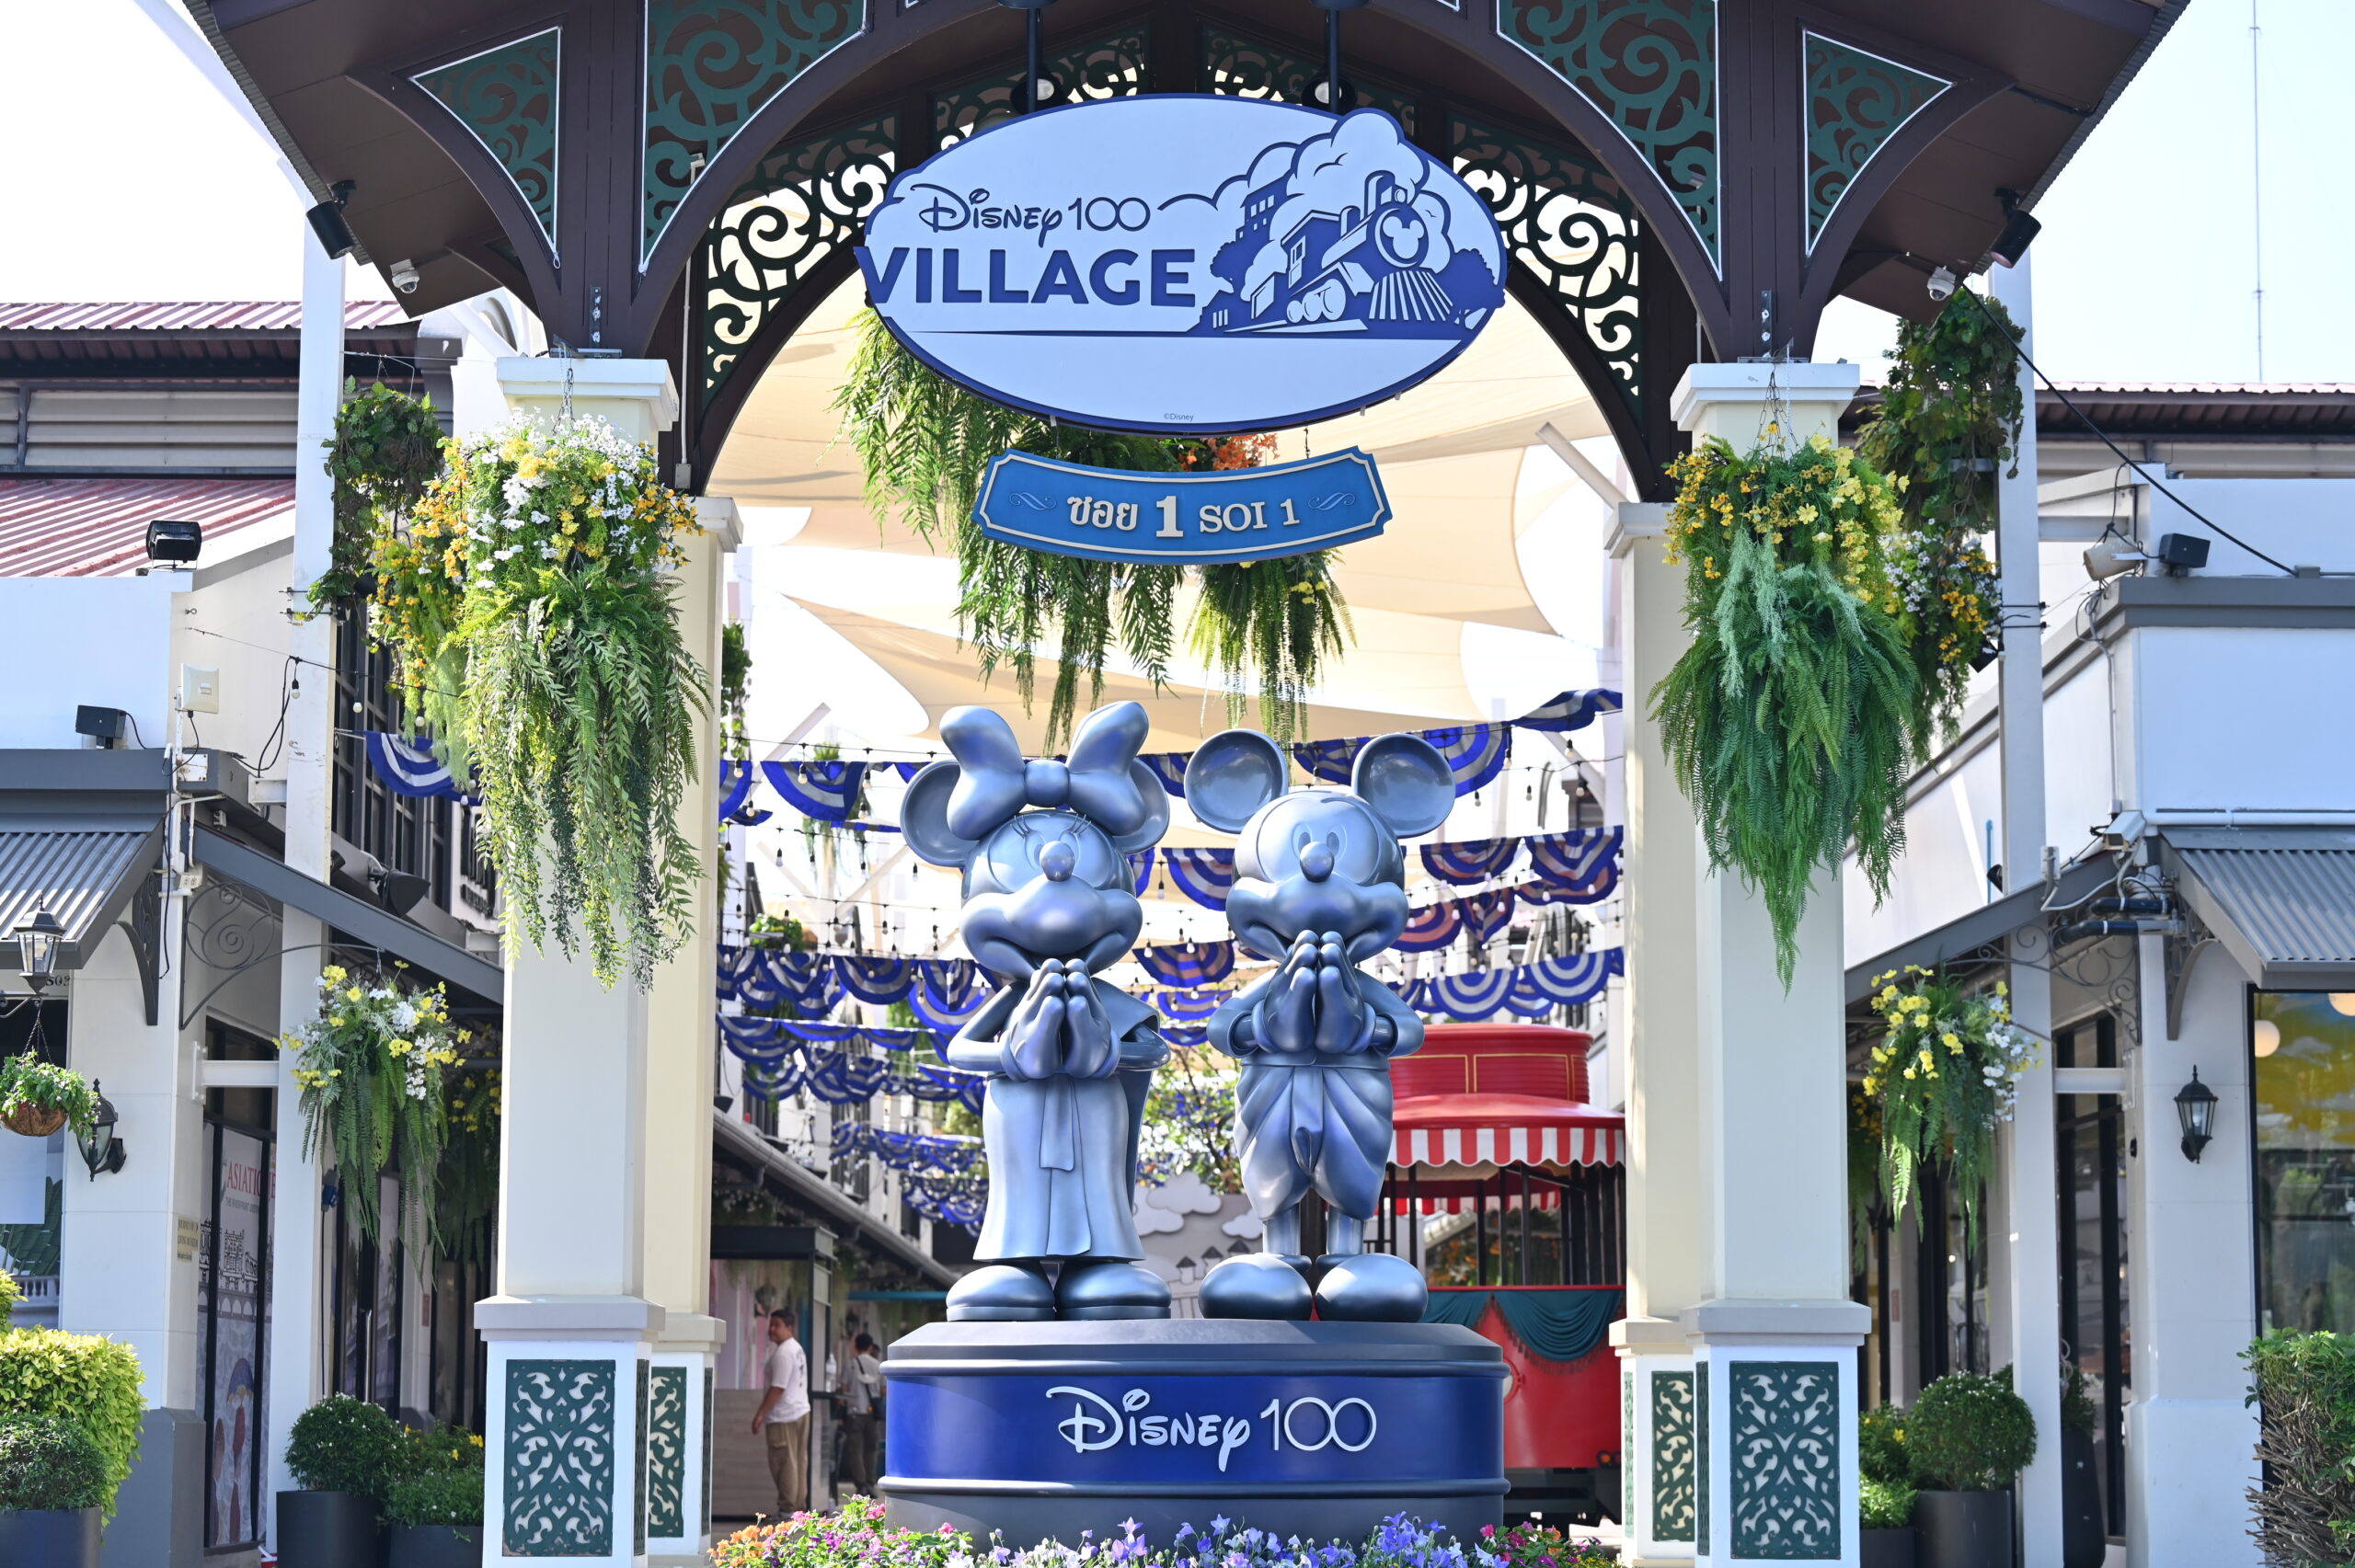 Disney100 Village